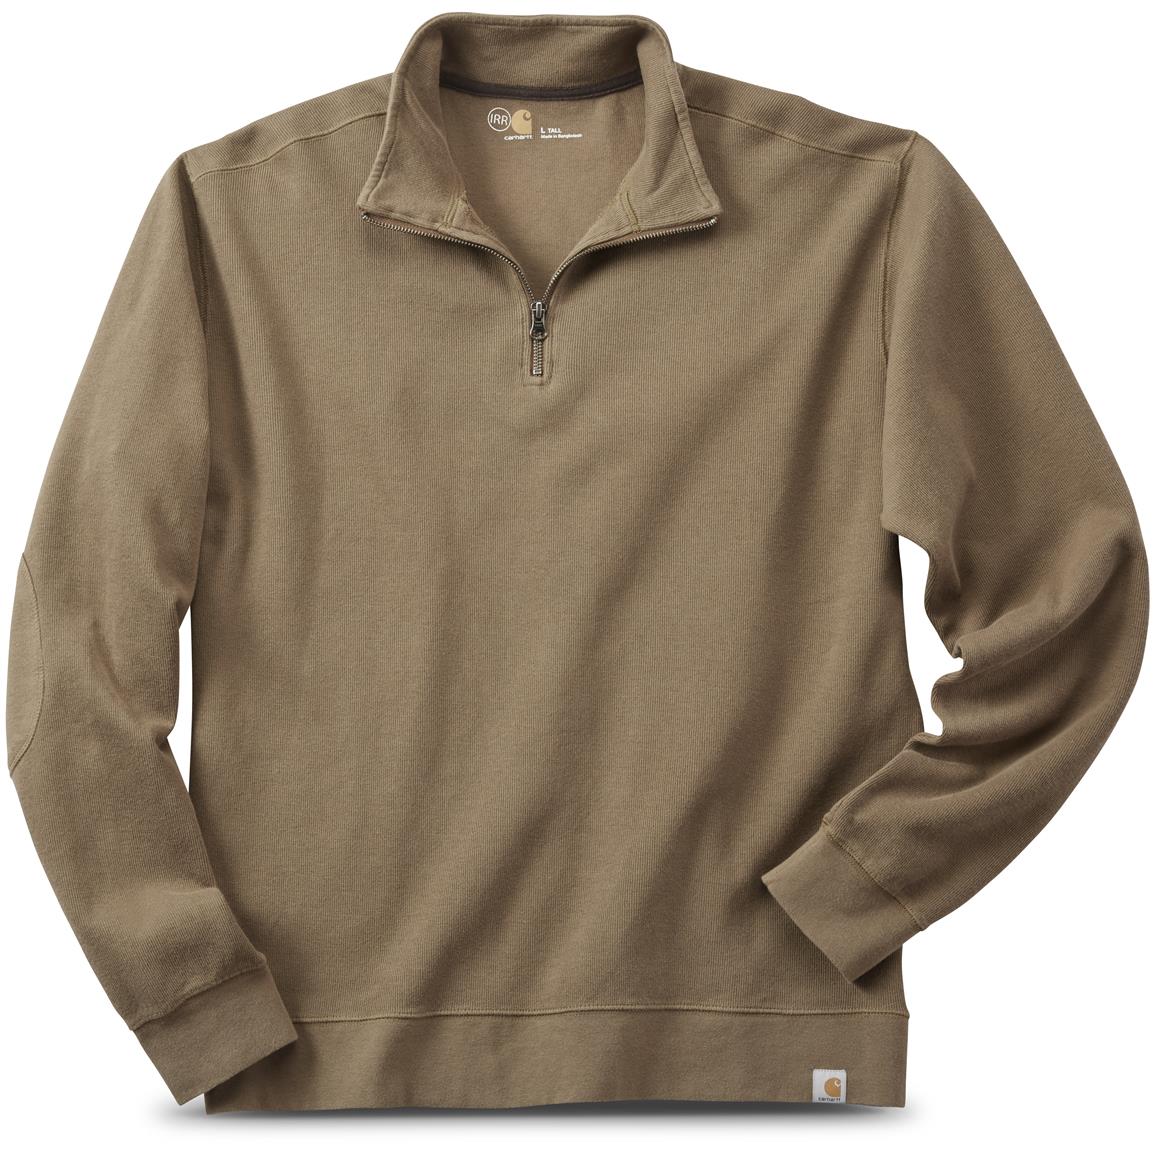 Carhartt Quarter-zip Sweater, Irregular - 655437, Sweaters at Sportsman ...